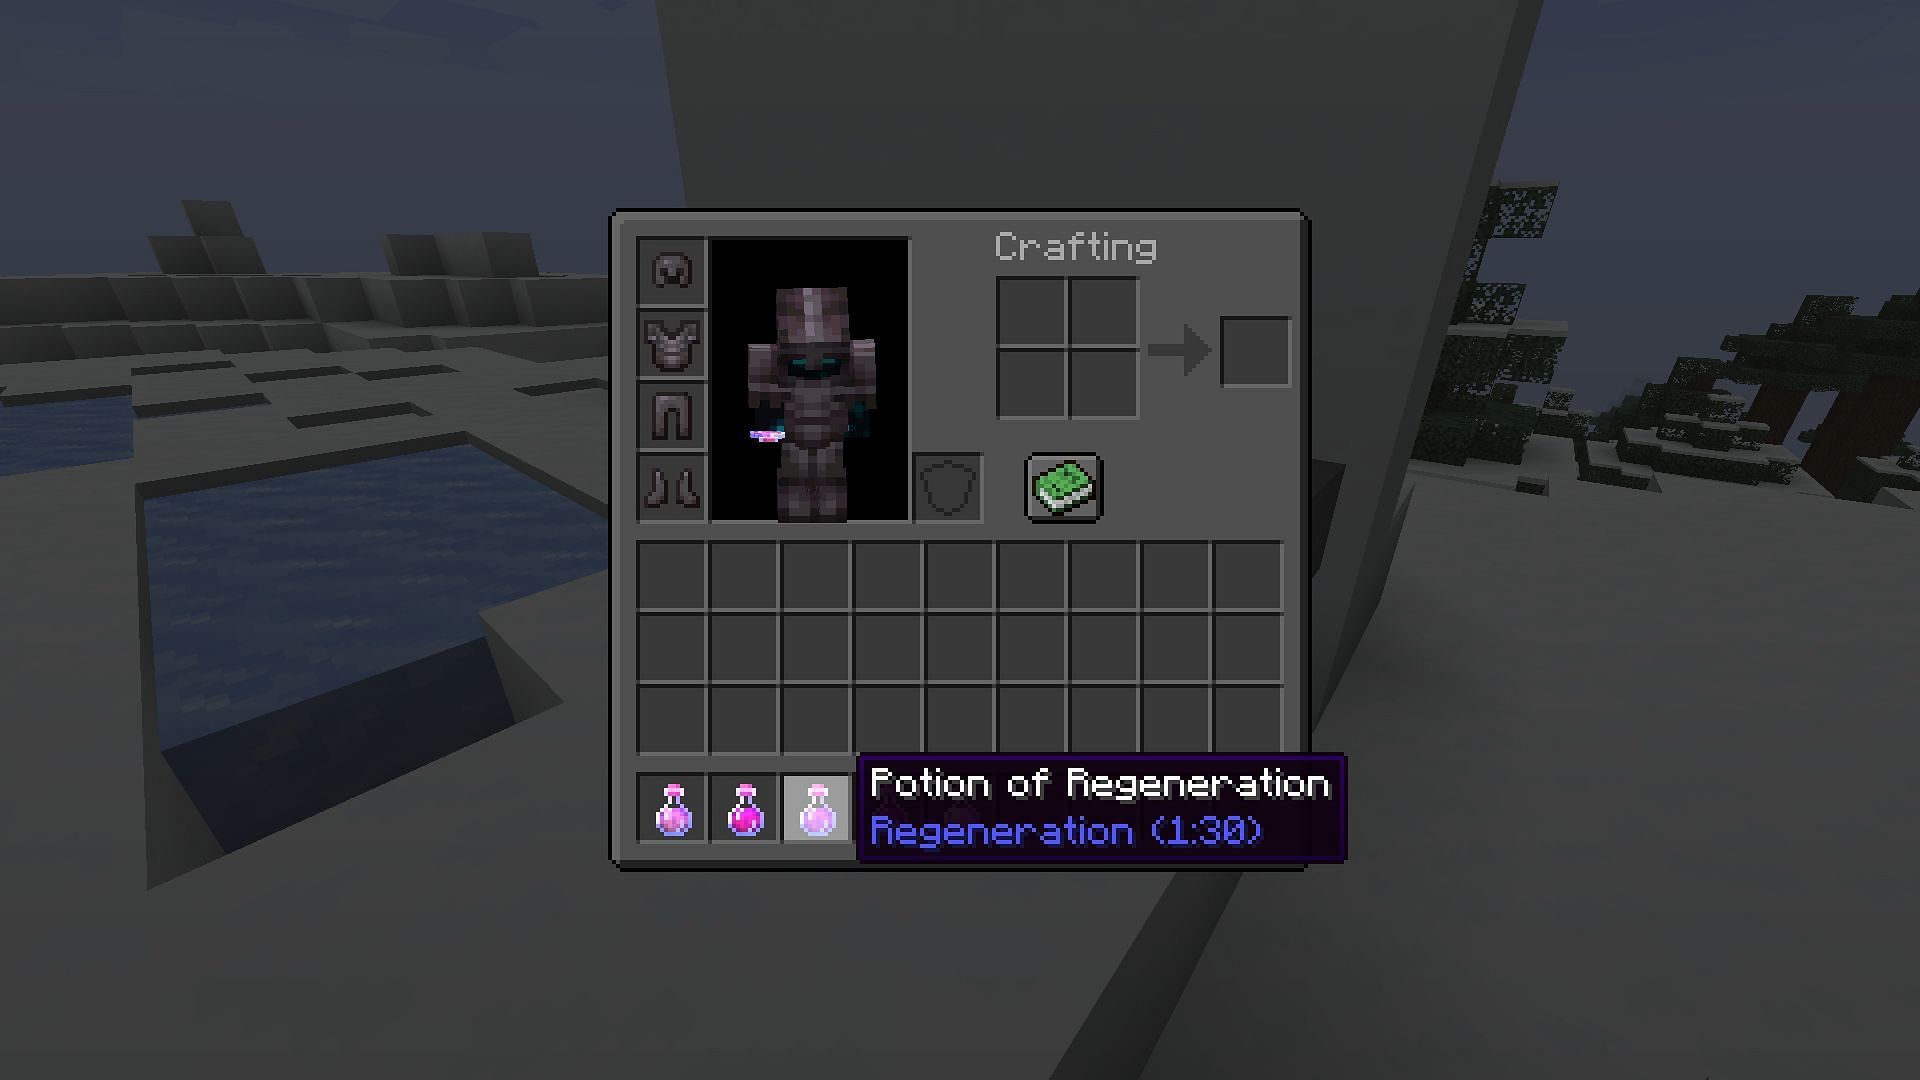 Potion of regeneration to gradually replenish some hearts in Minecraft (Image via Mojang)